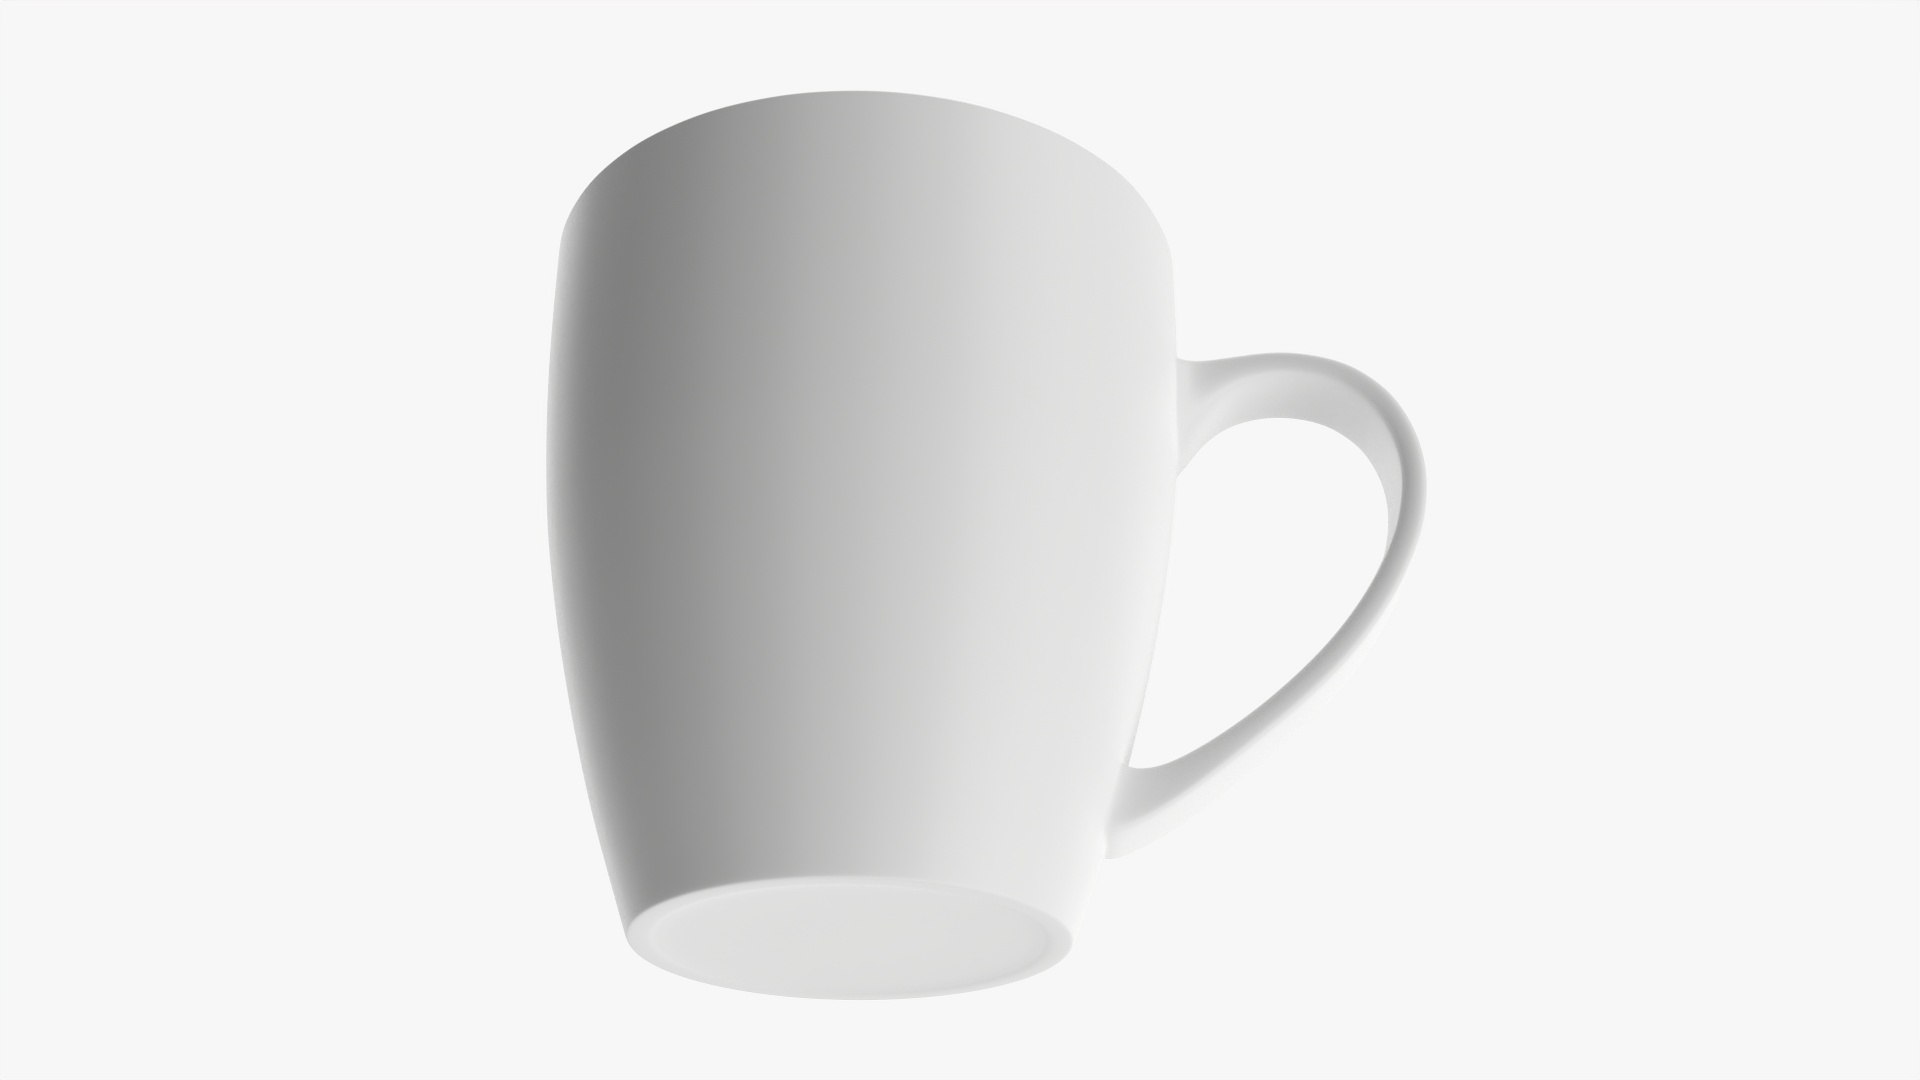 Transparent glass coffee mug with handle 09 3D model